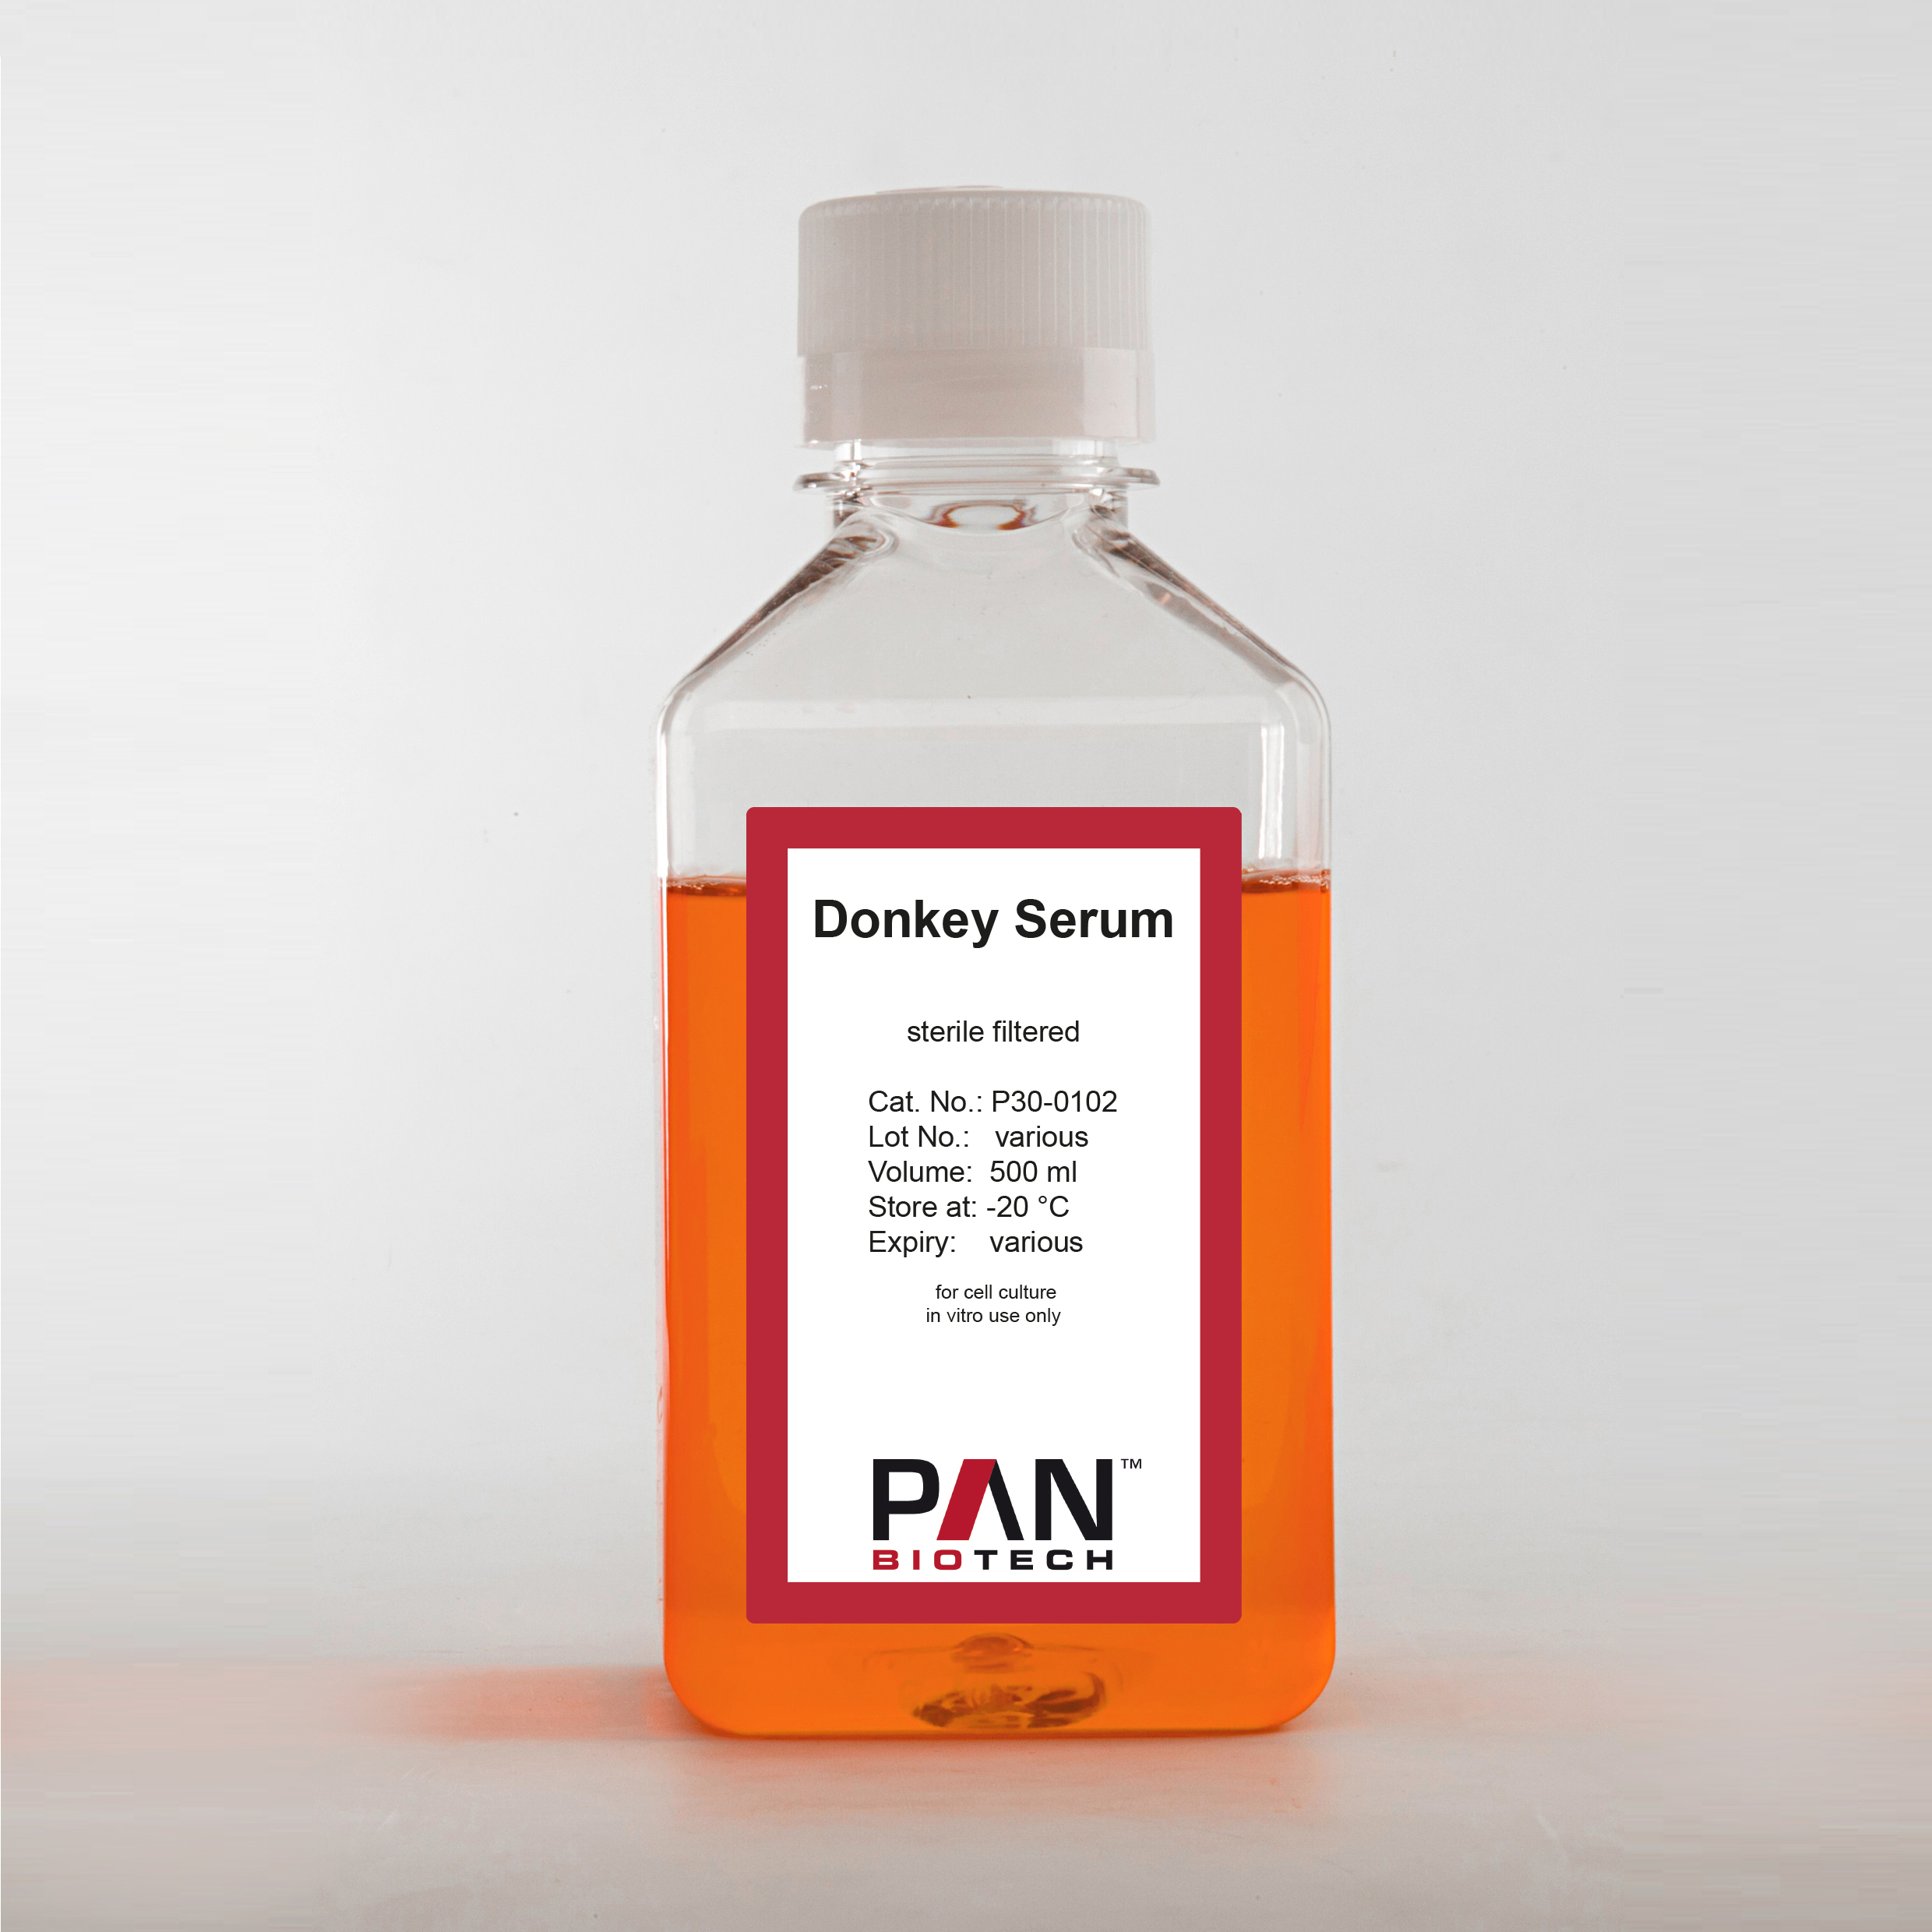 Donkey Serum, sterile filtered